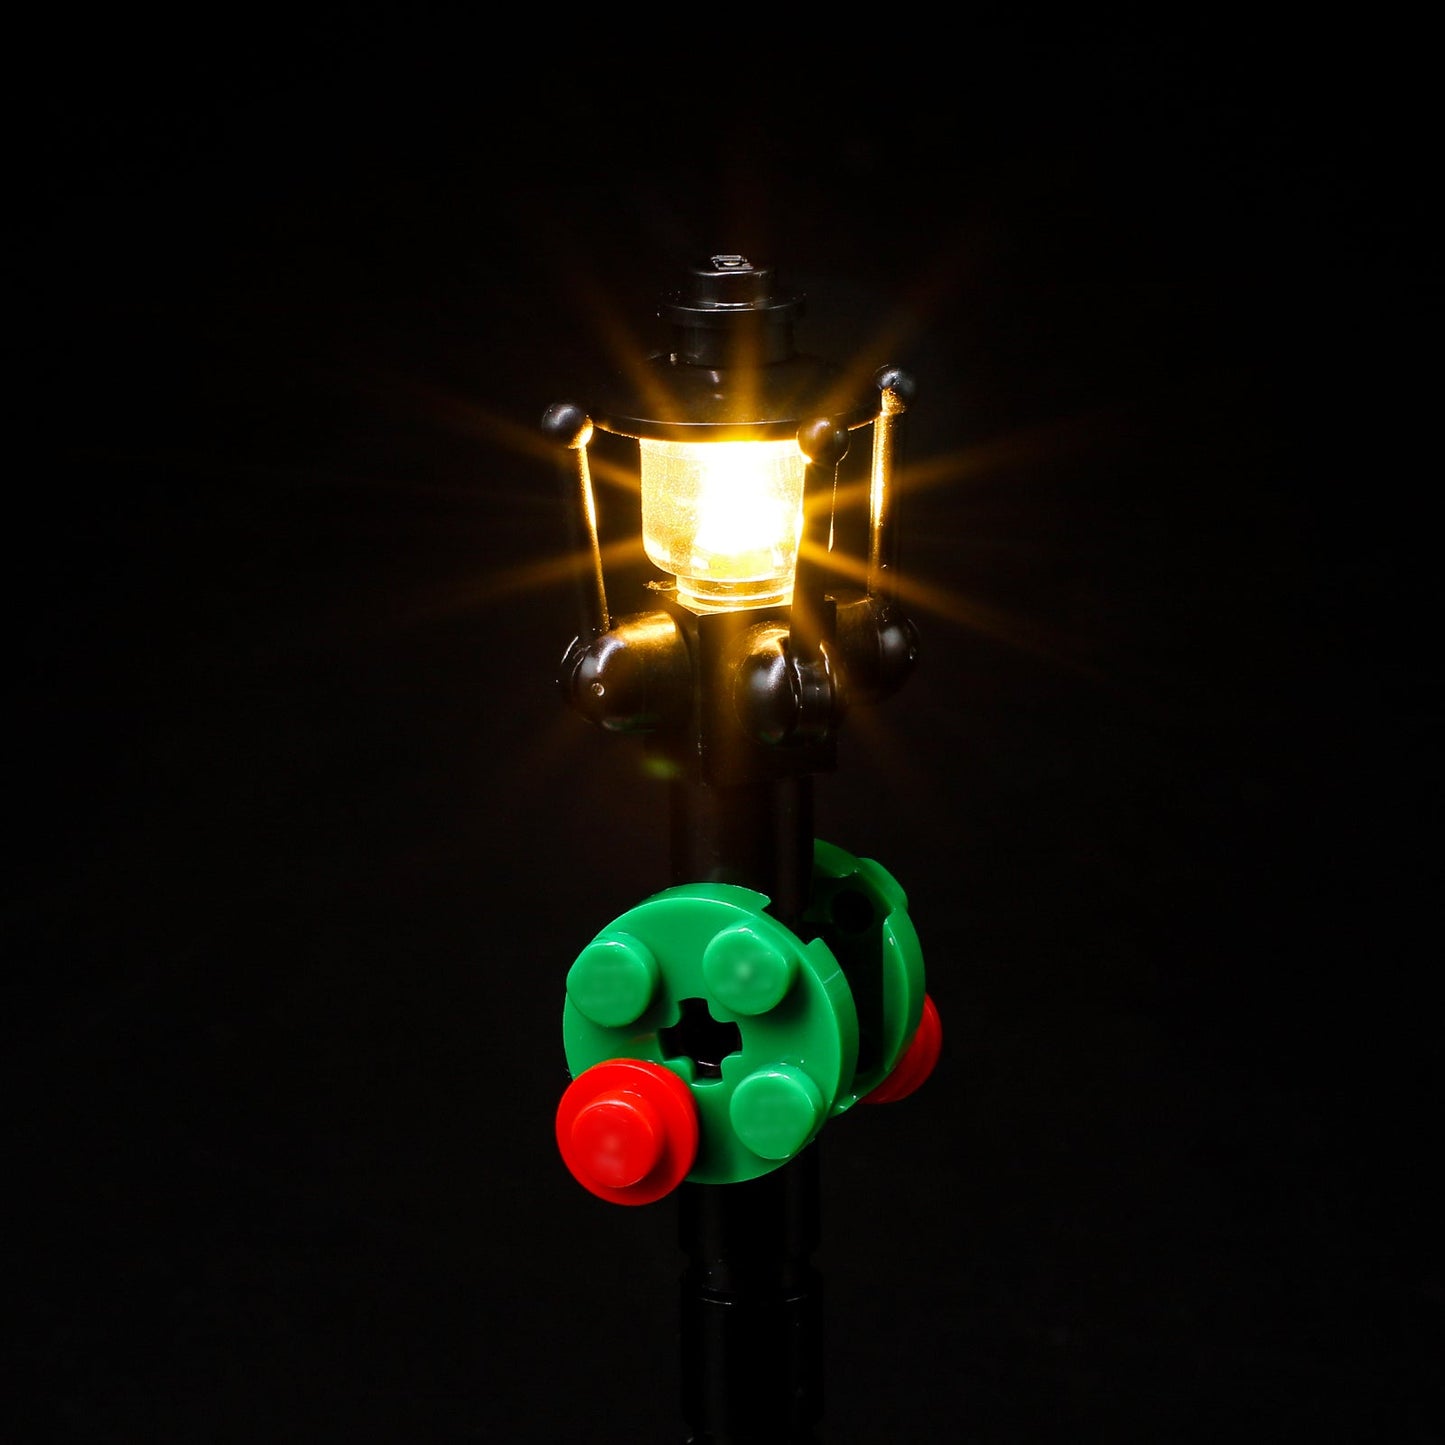 Briksmax Christmas Street Light Toy